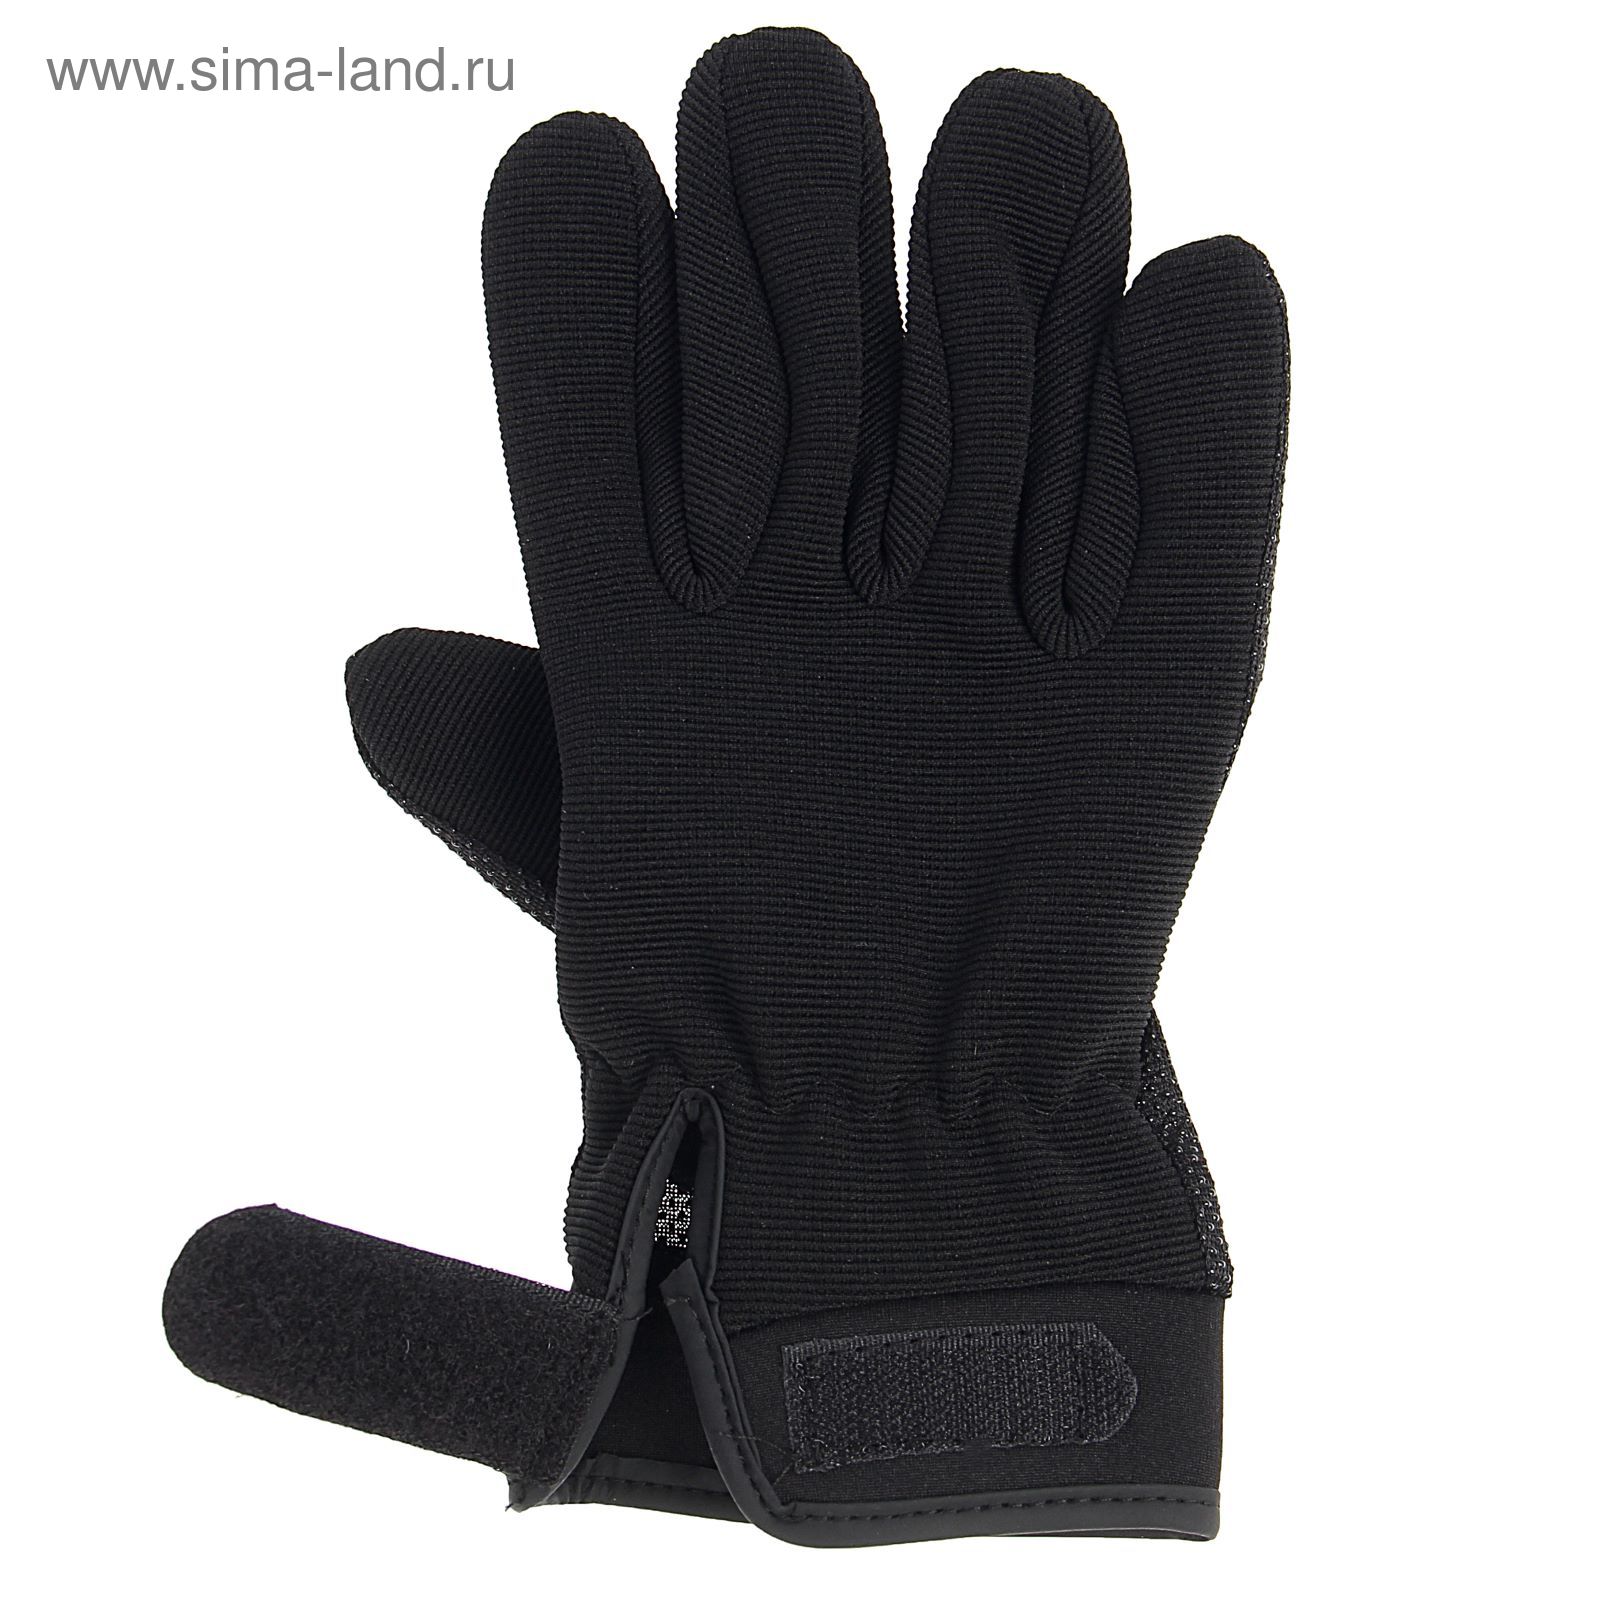 Перчатки GL612, микрофибра, размер L, black